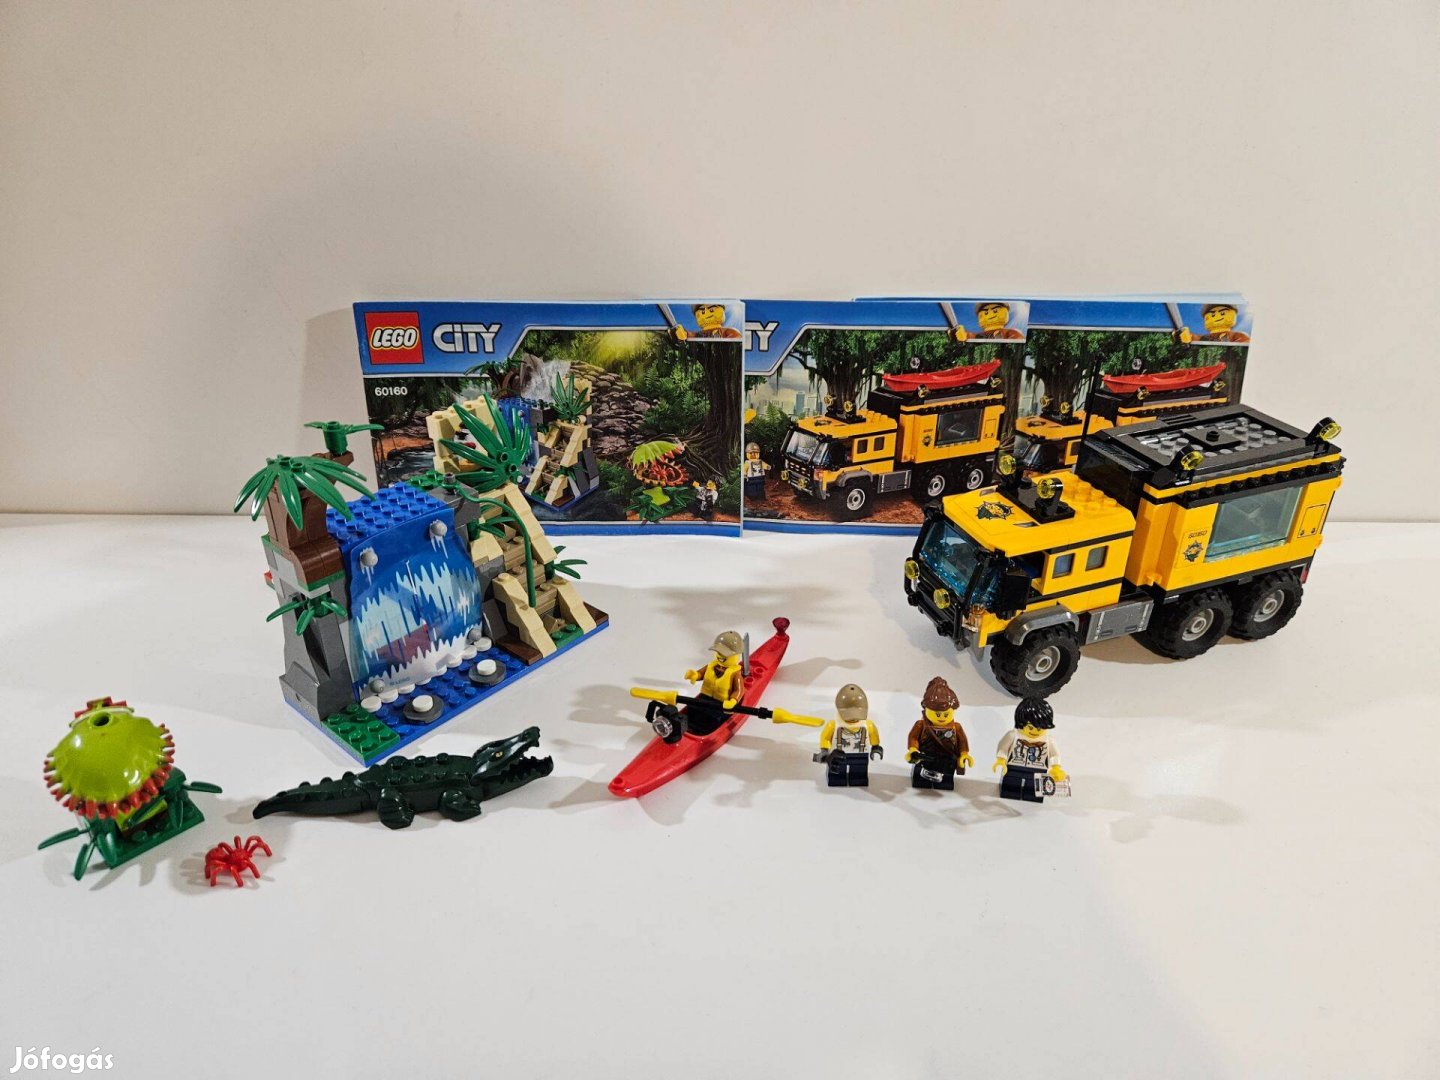 LEGO City Jungle - 60160 - Jungle Mobile Lab